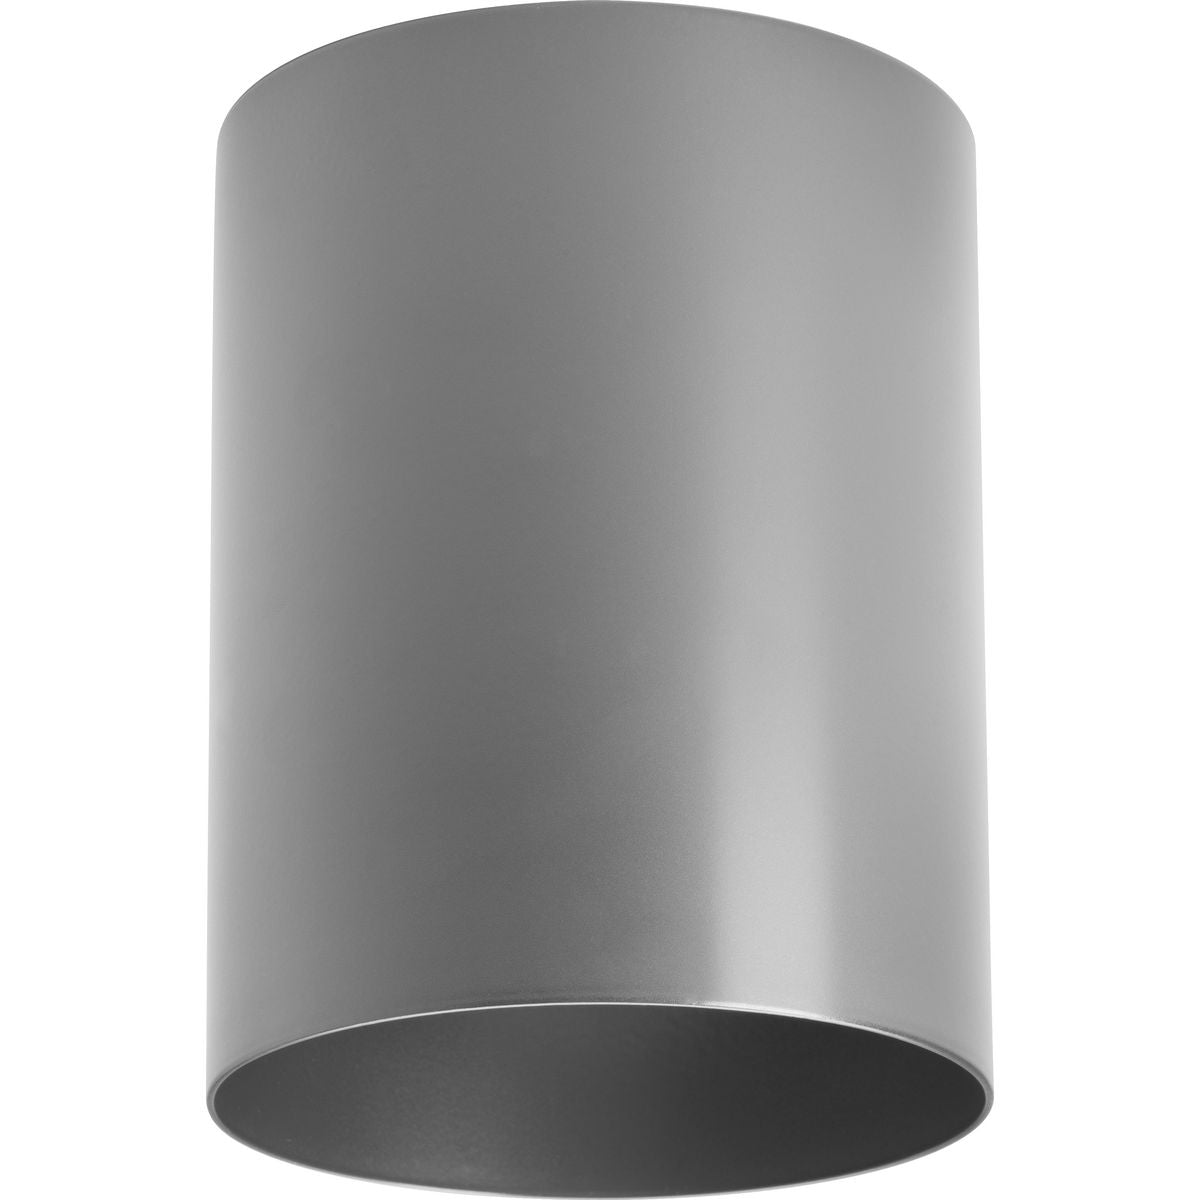 Cylinder Outdoor Ceiling Light